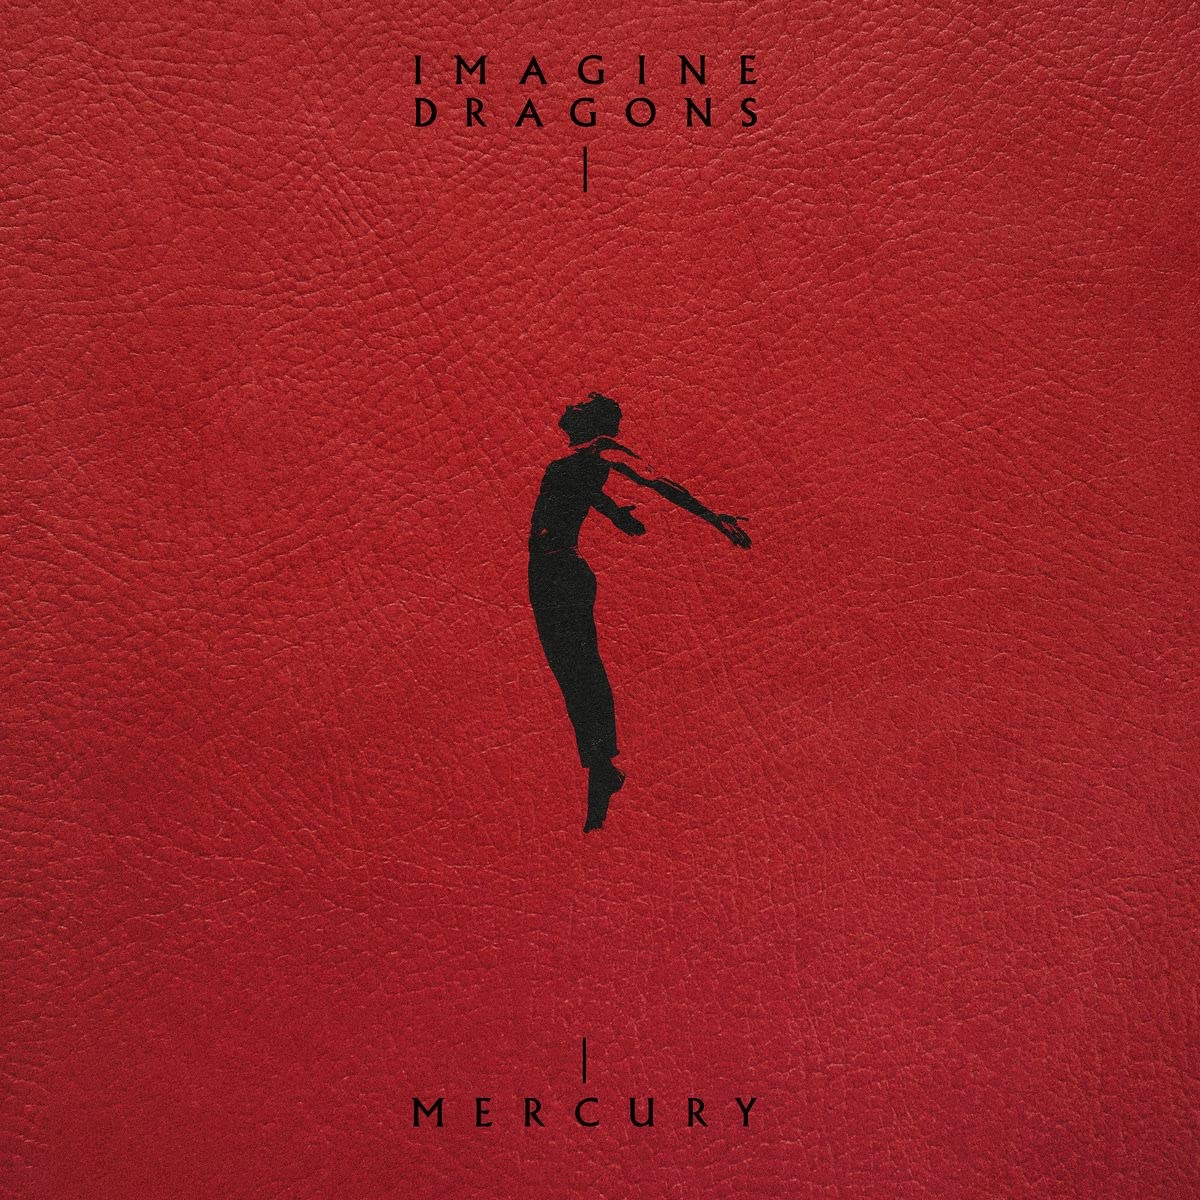 imagine Dragons – Mercury - Act 2